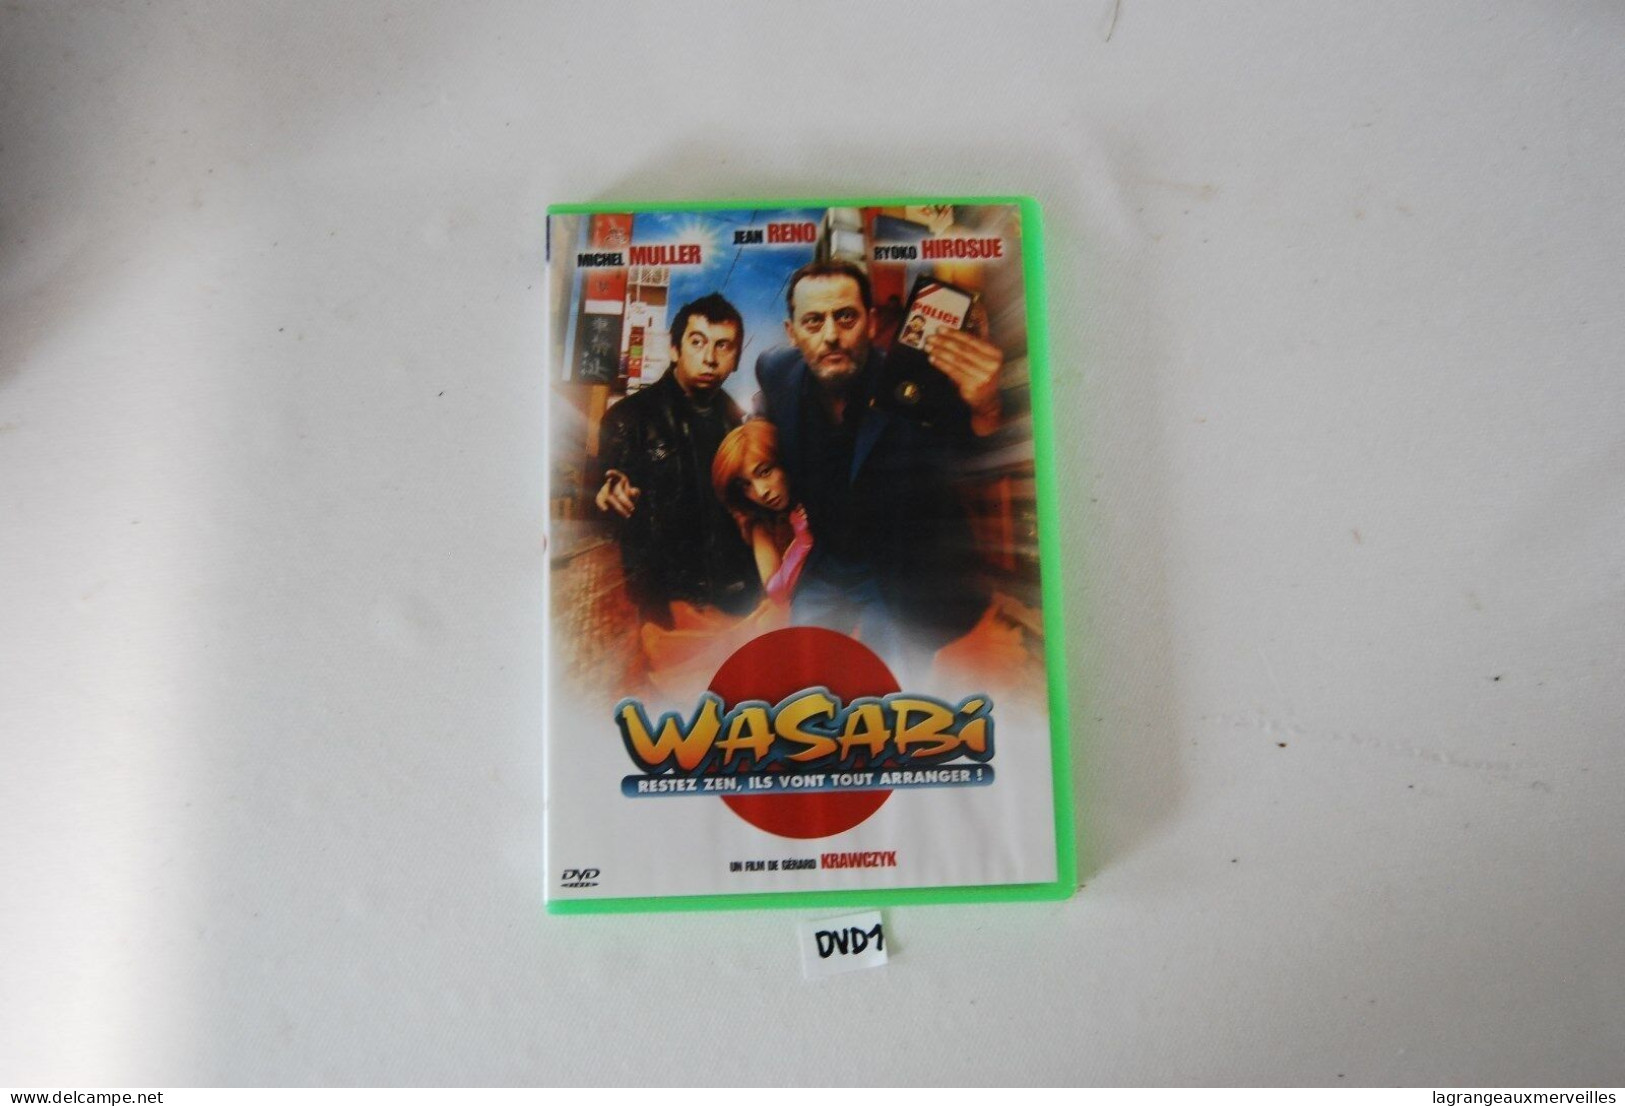 DVD 1 - WASABI - JEAN RENO - Comedy